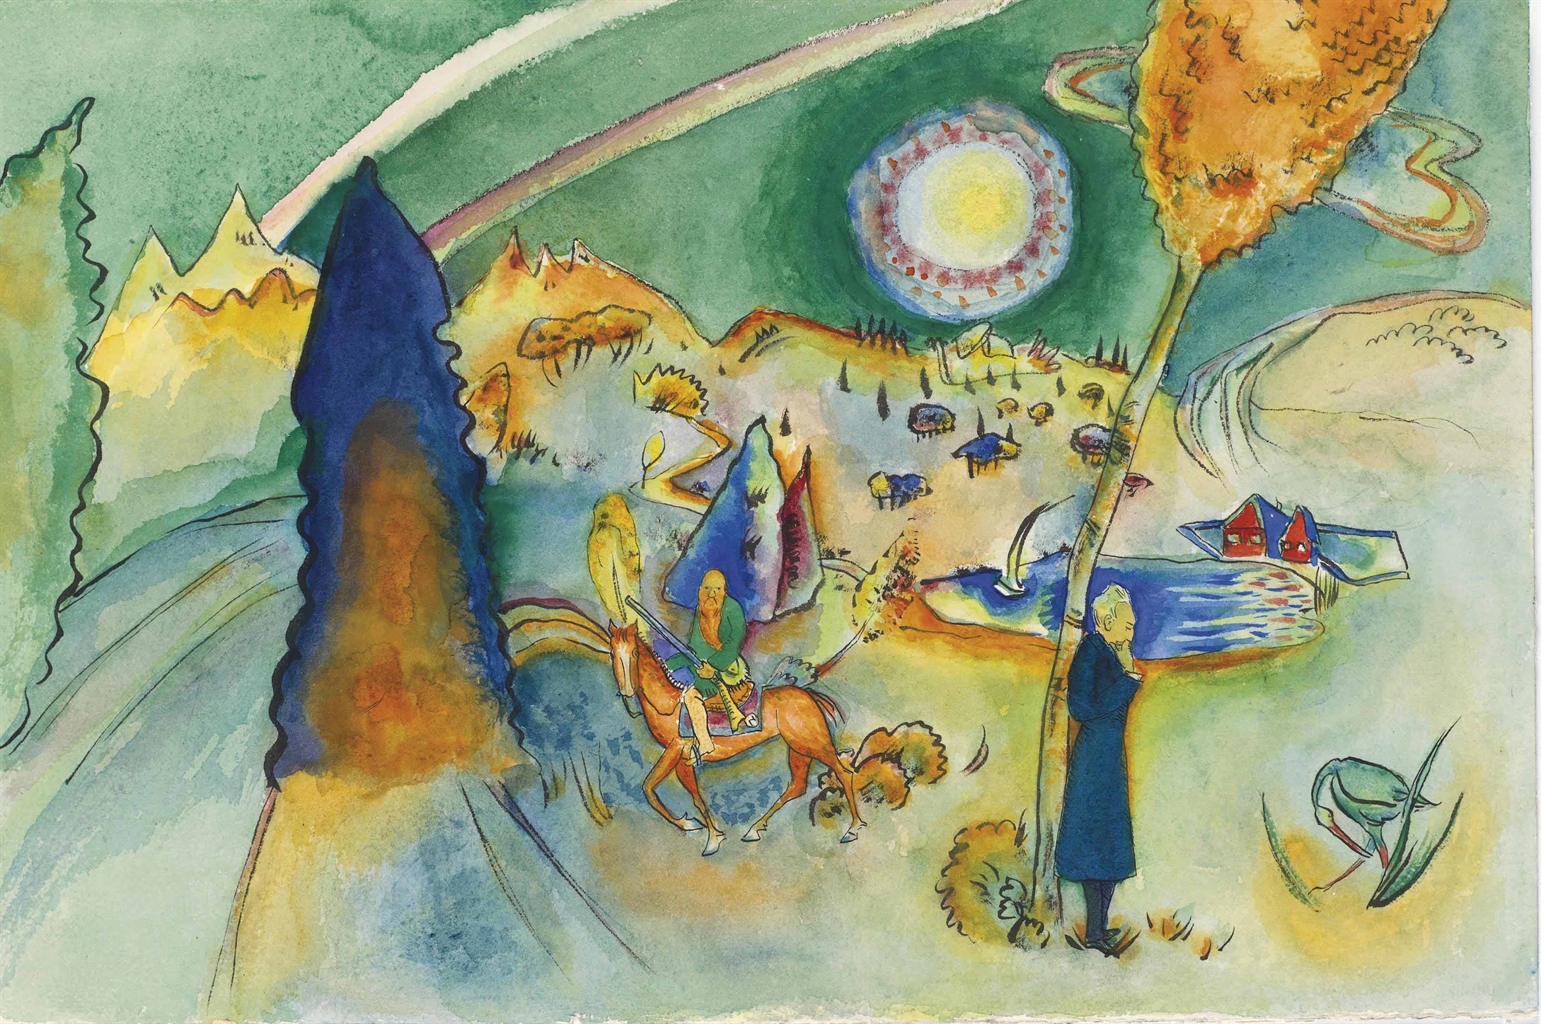 Wassily+Kandinsky-1866-1944 (336).jpg